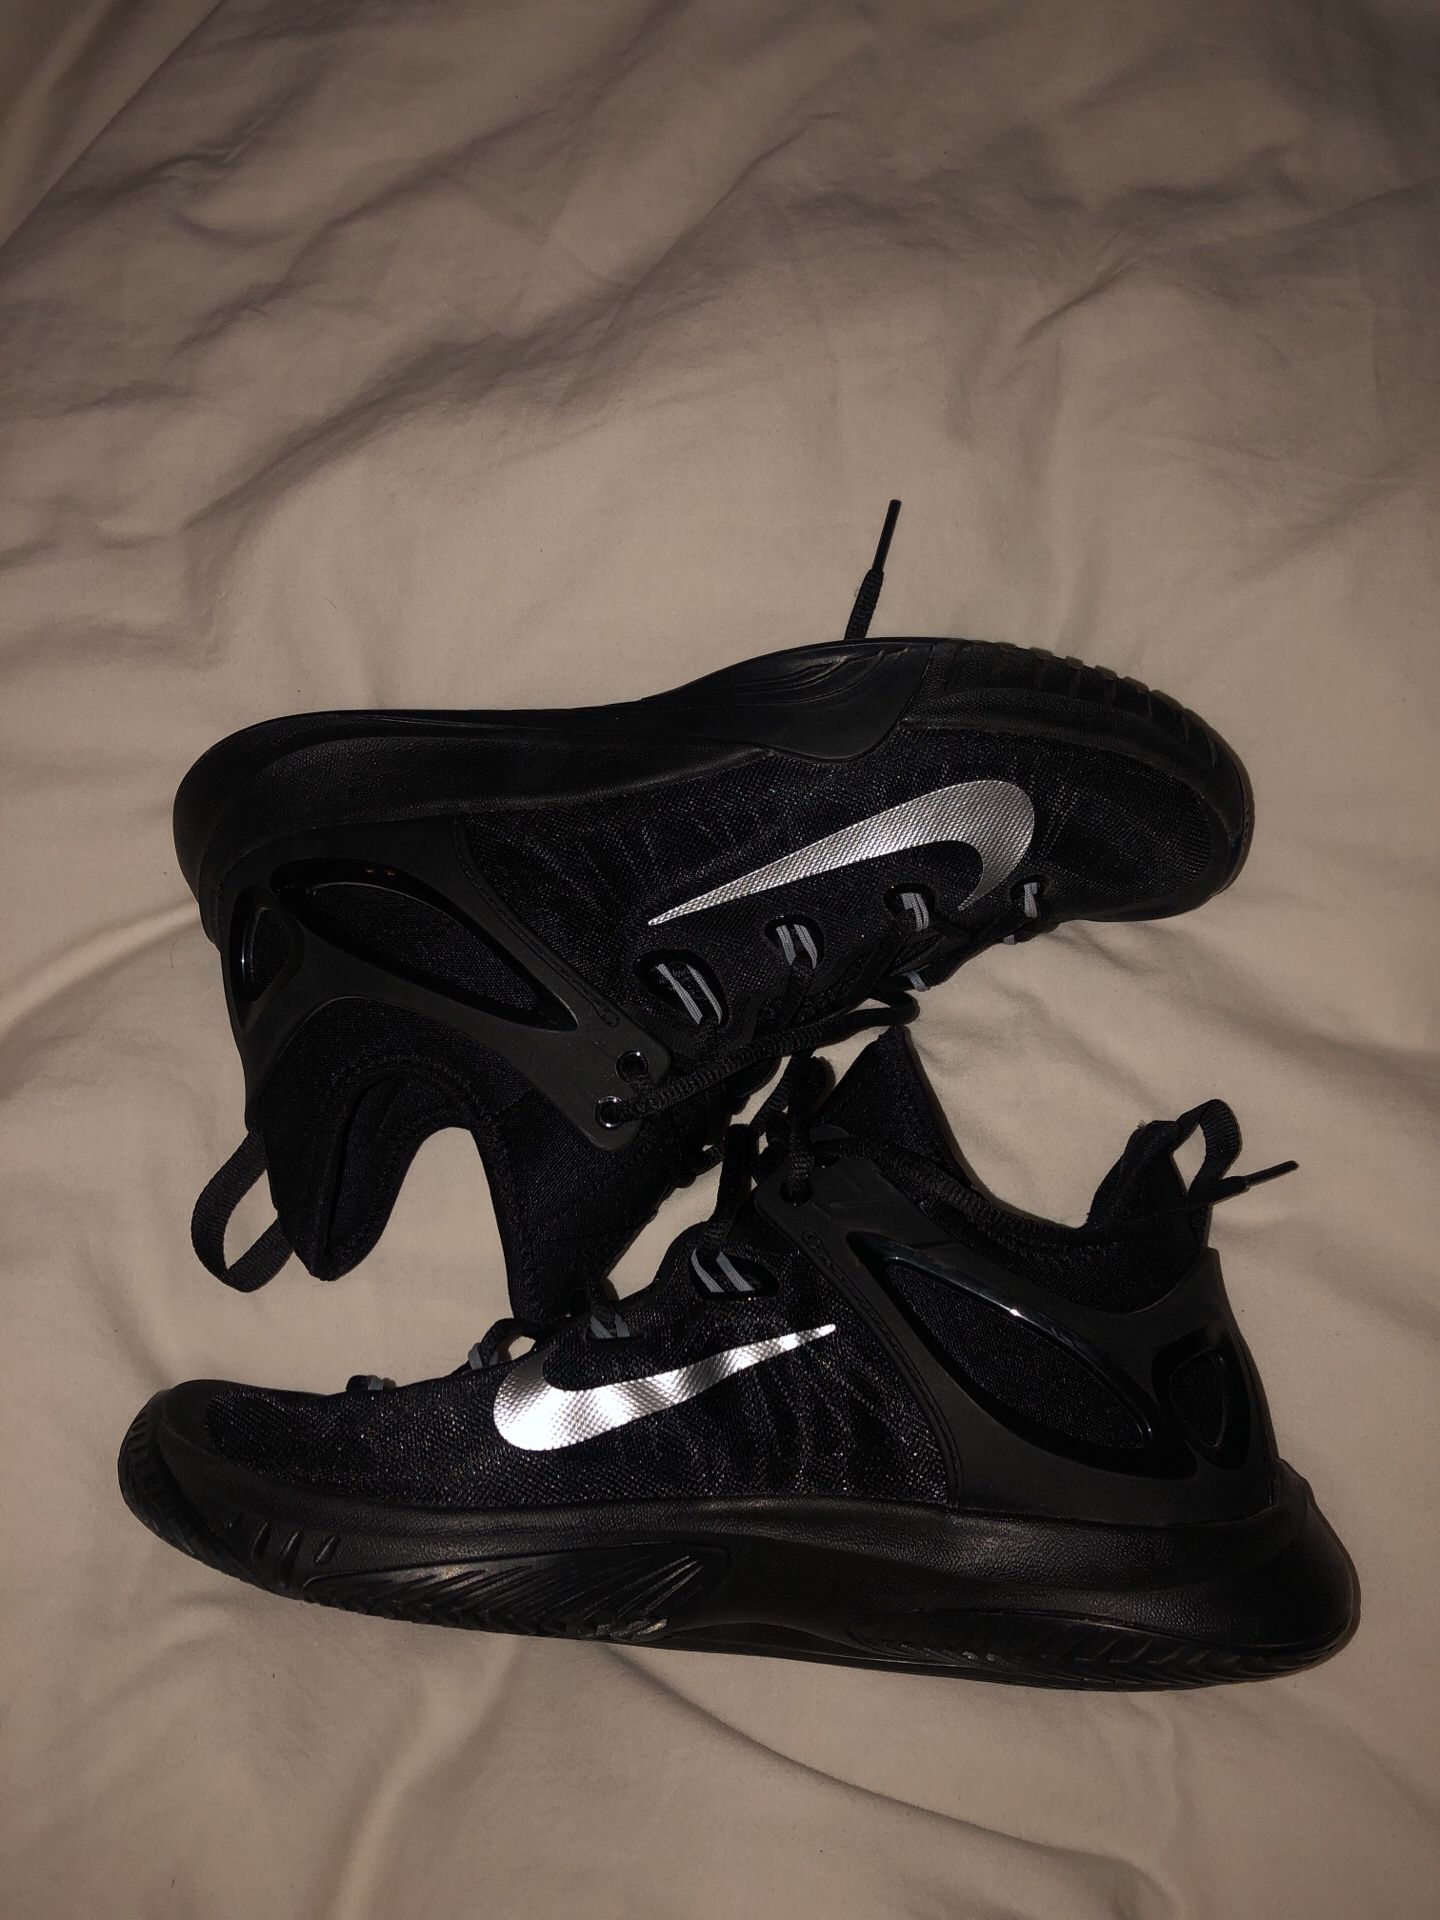 basketball shoe size 8 1/2